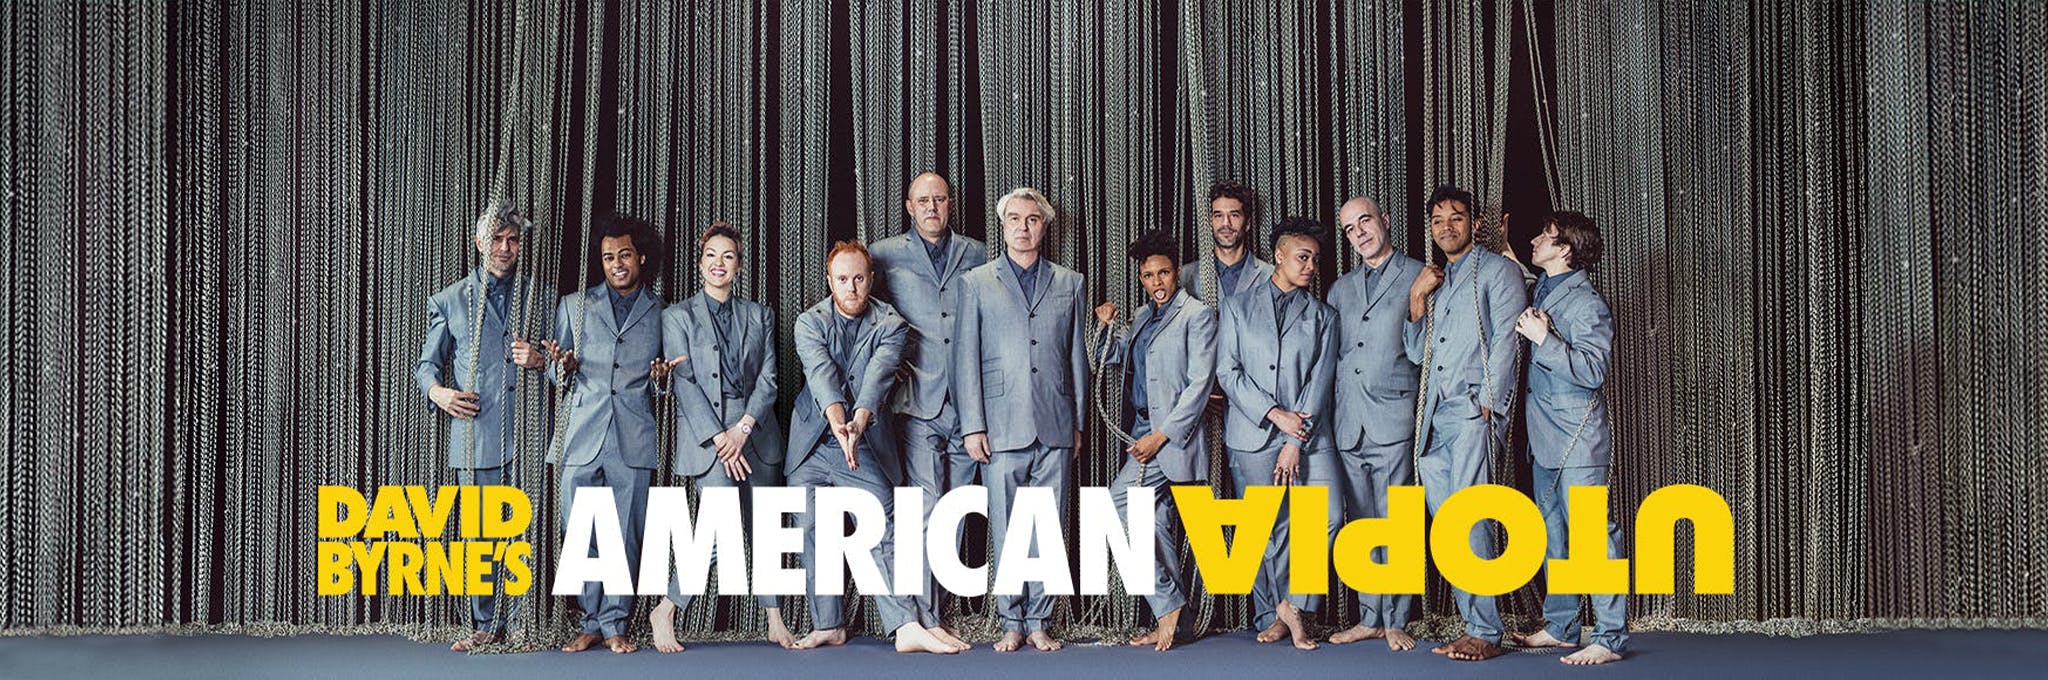 David Byrne's American Utopia on Broadway Rush Tickets New York